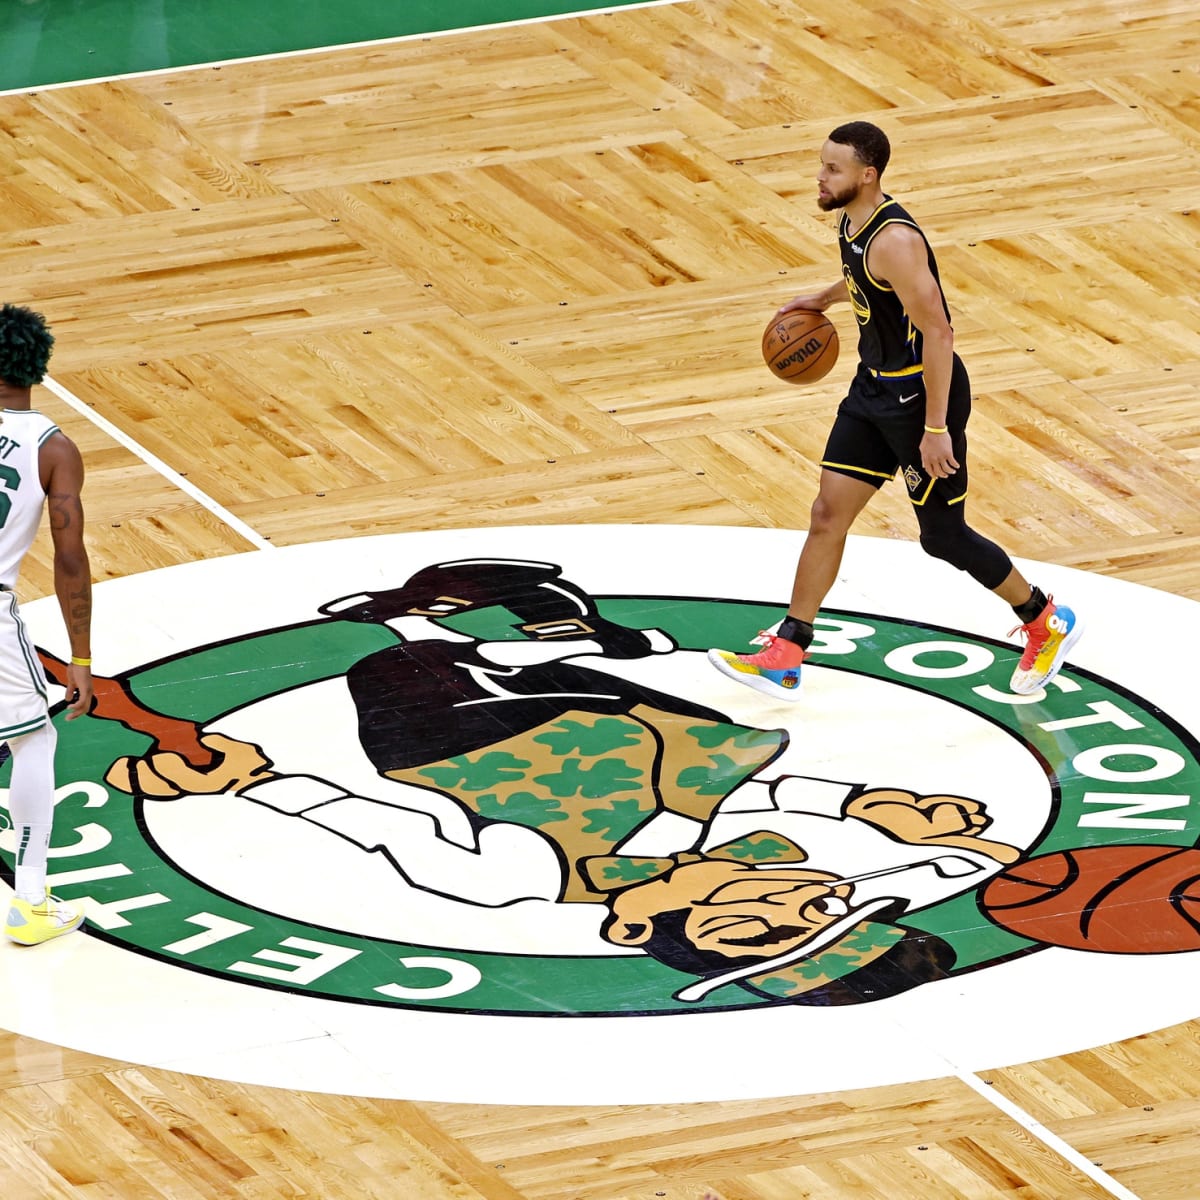 The Celtics went dormant on offense just as Steph Curry came alive -  CelticsBlog